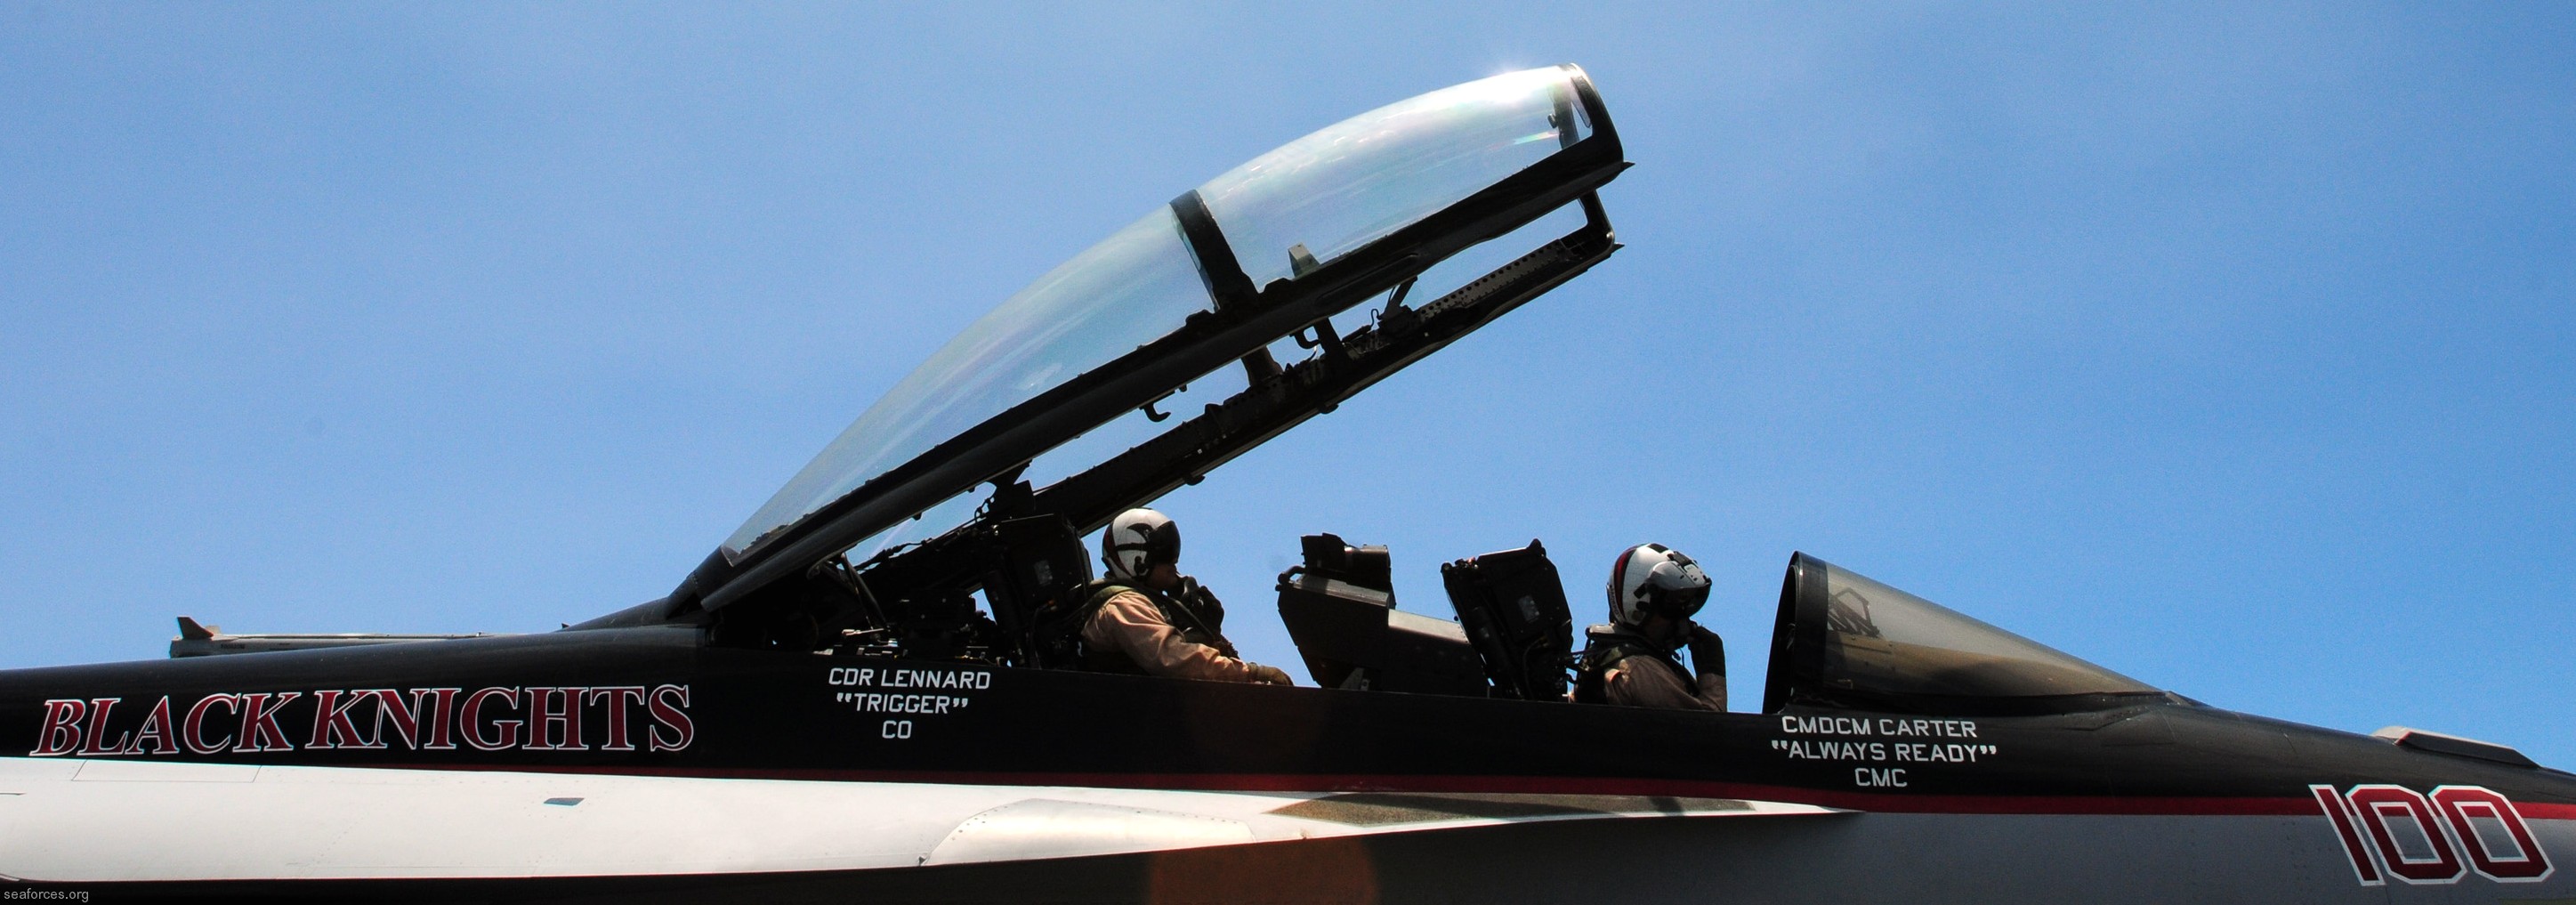 vfa-154 black knights strike fighter squadron navy f/a-18f super hornet carrier air wing cvw-14 uss ronald reagan cvn-76 105